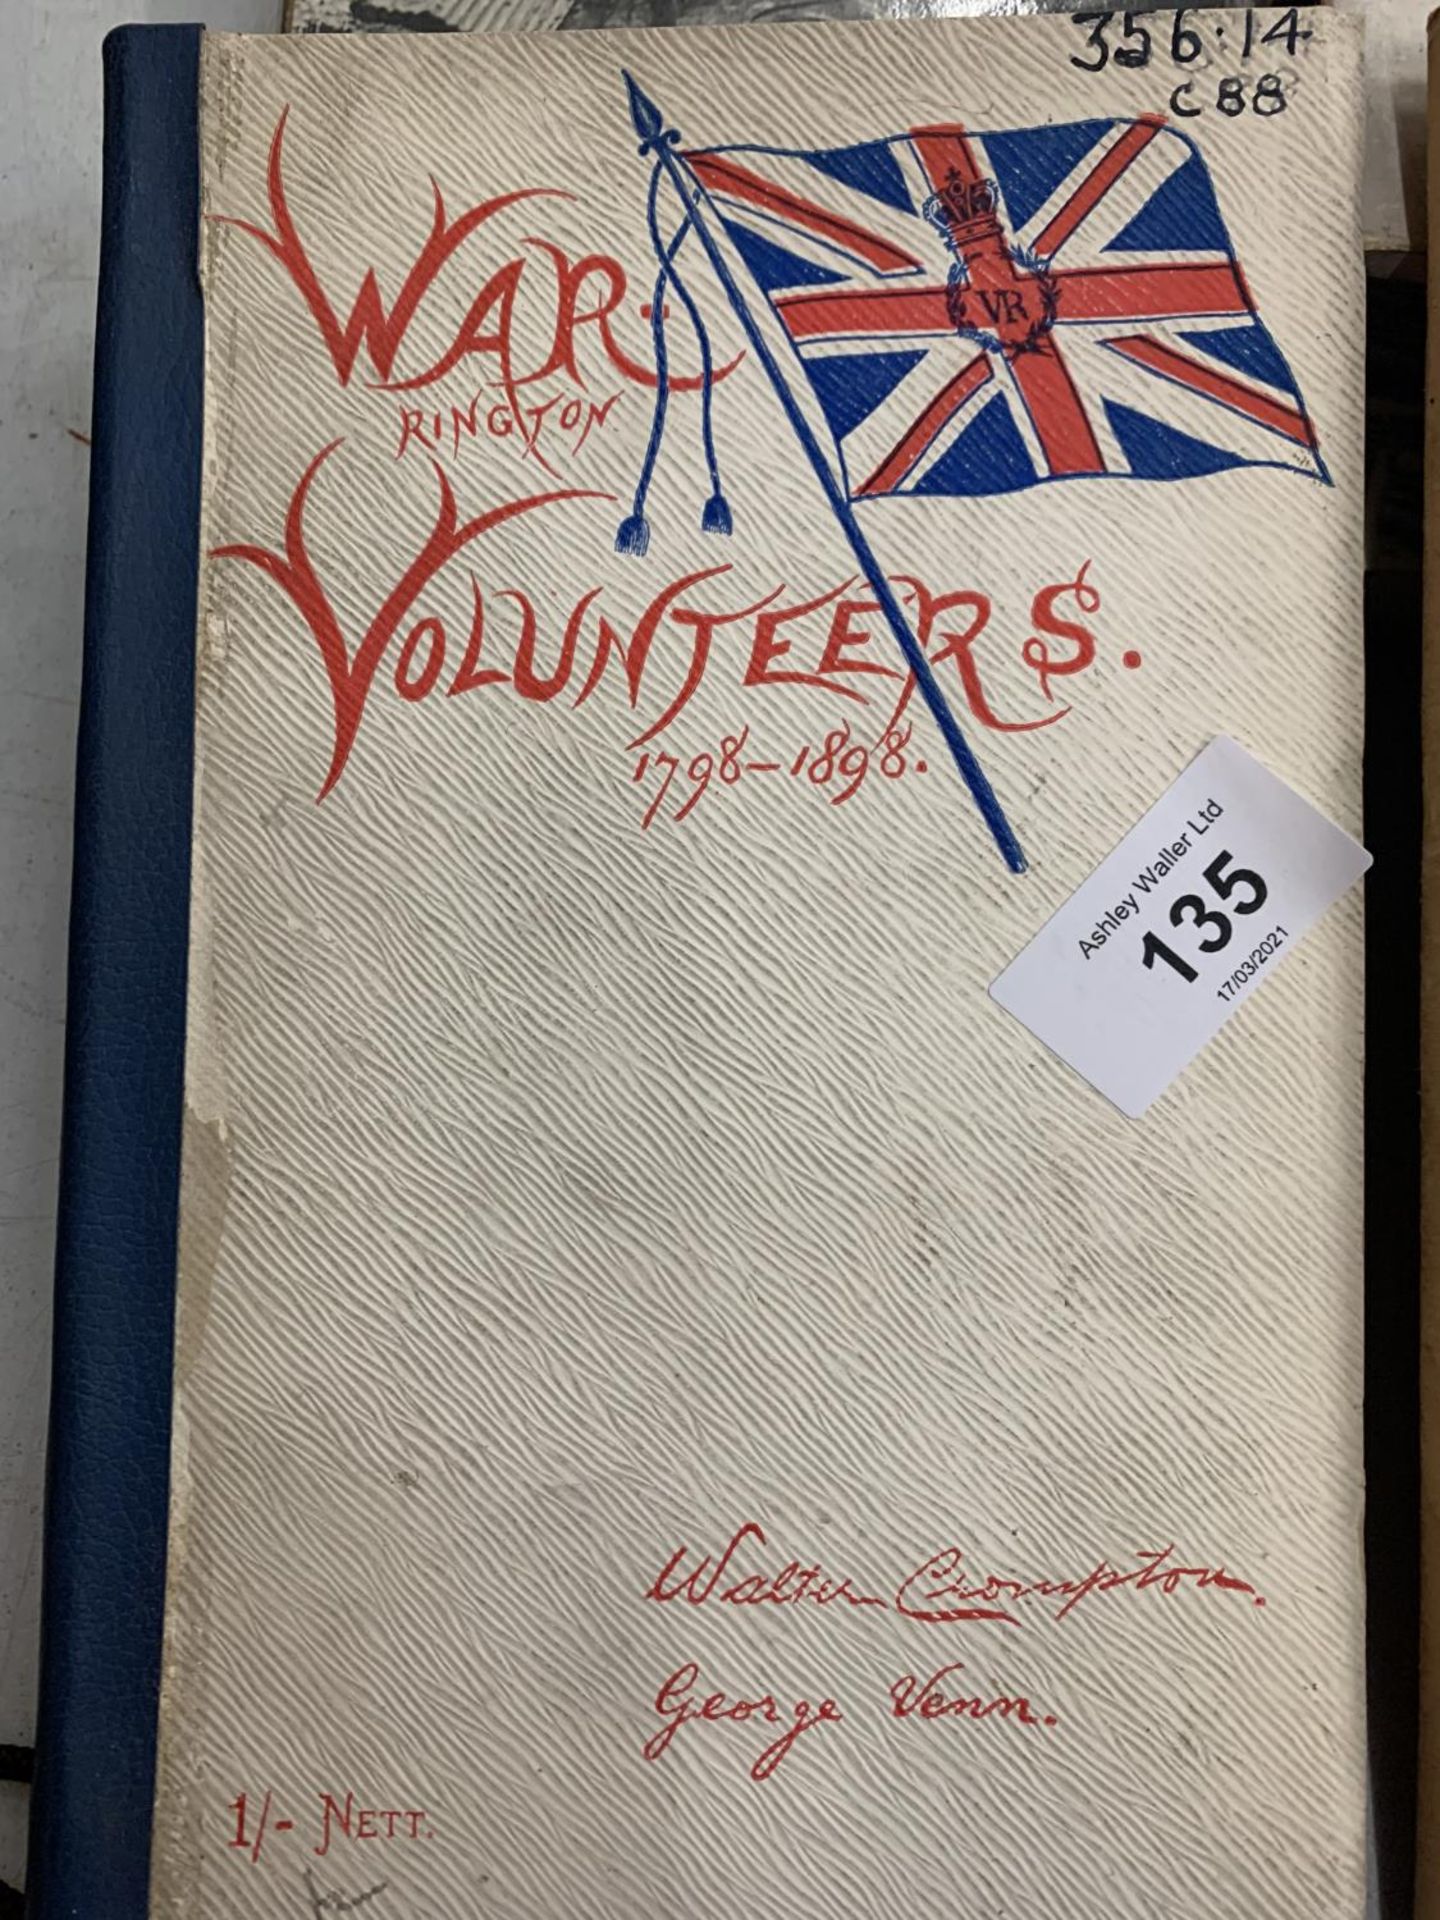 A BRITISH WORLD WAR II BOOK ON FIELDCRAFT AND BATTLE DRILL, WARRINGTON VOLUNTEERS 1798-1898, WWII - Image 6 of 10